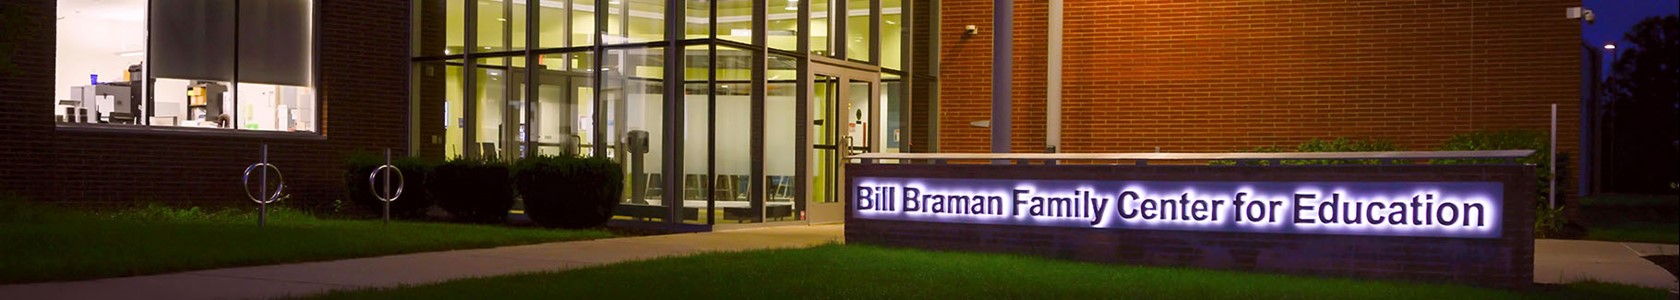 bill braman building evening picture.